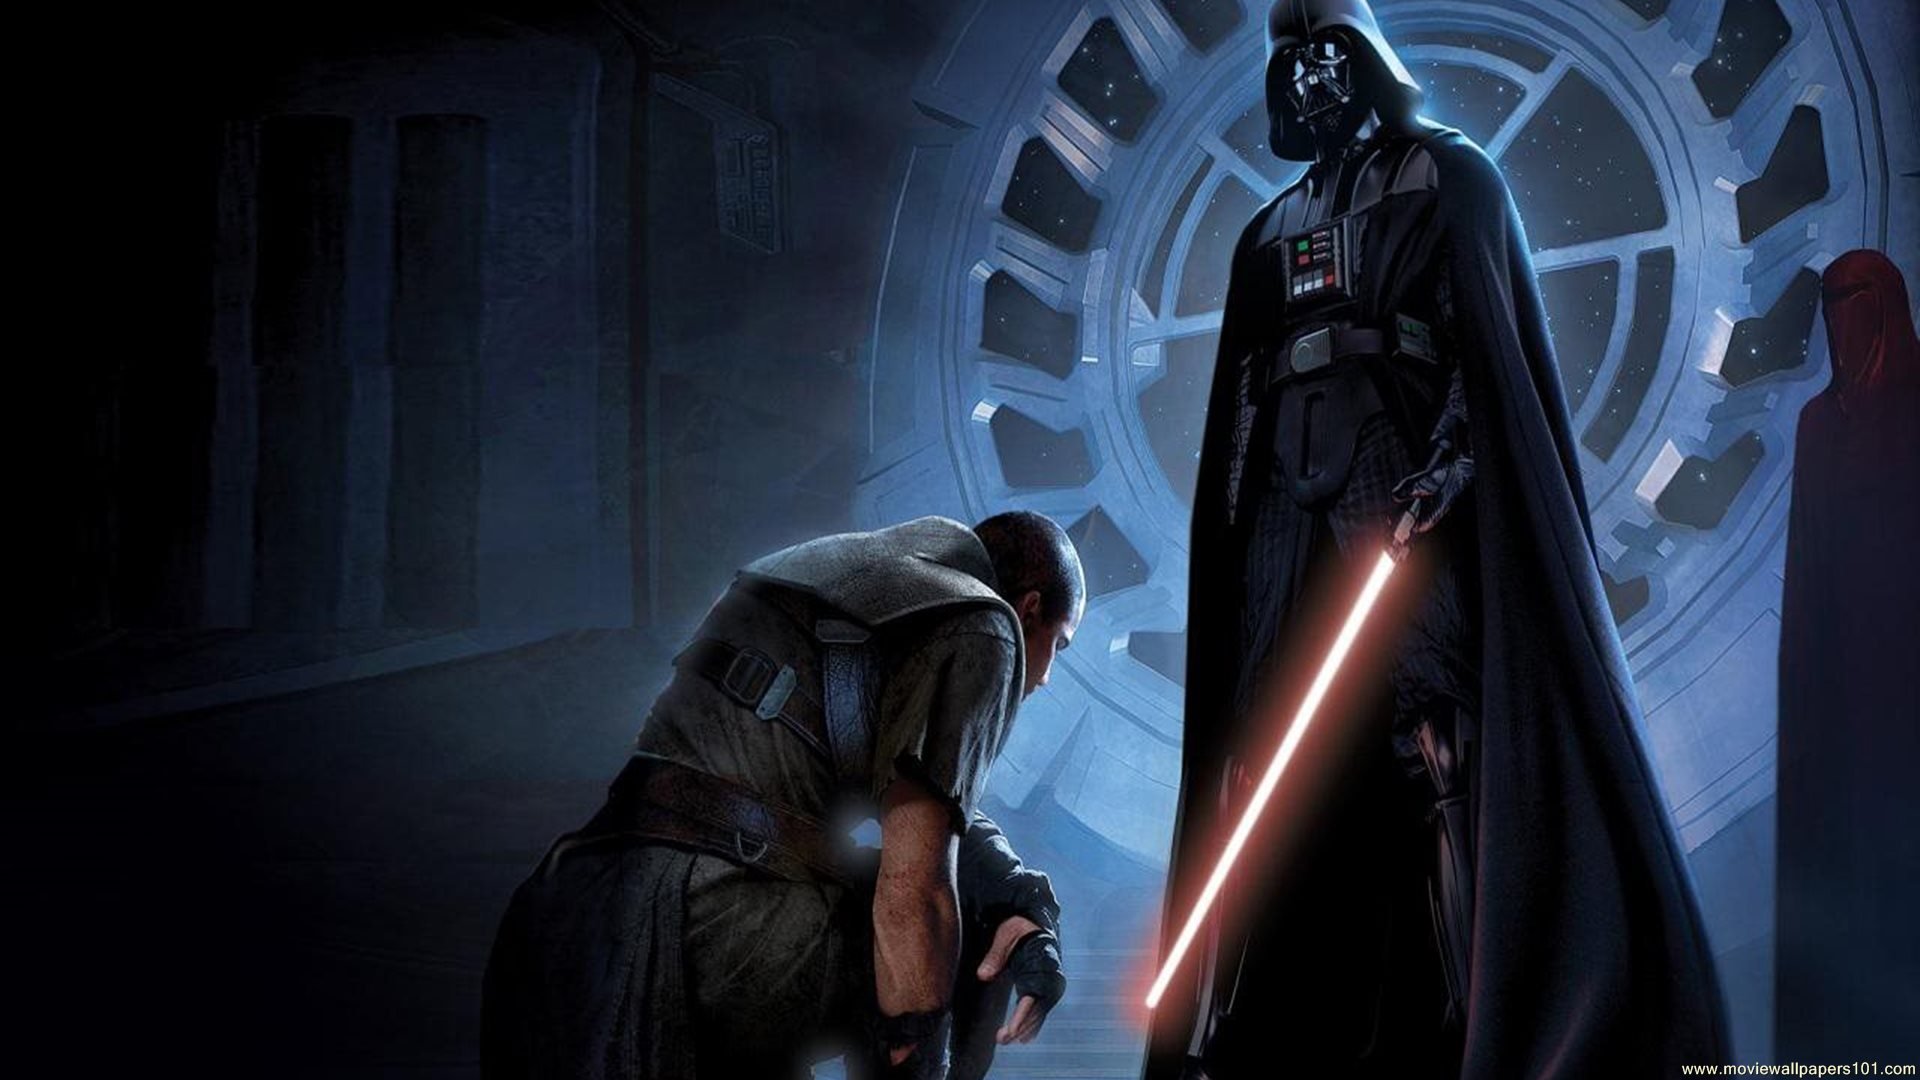 Download Star Wars VII Force Awakens 2015 Movie HD Wallpaper Search